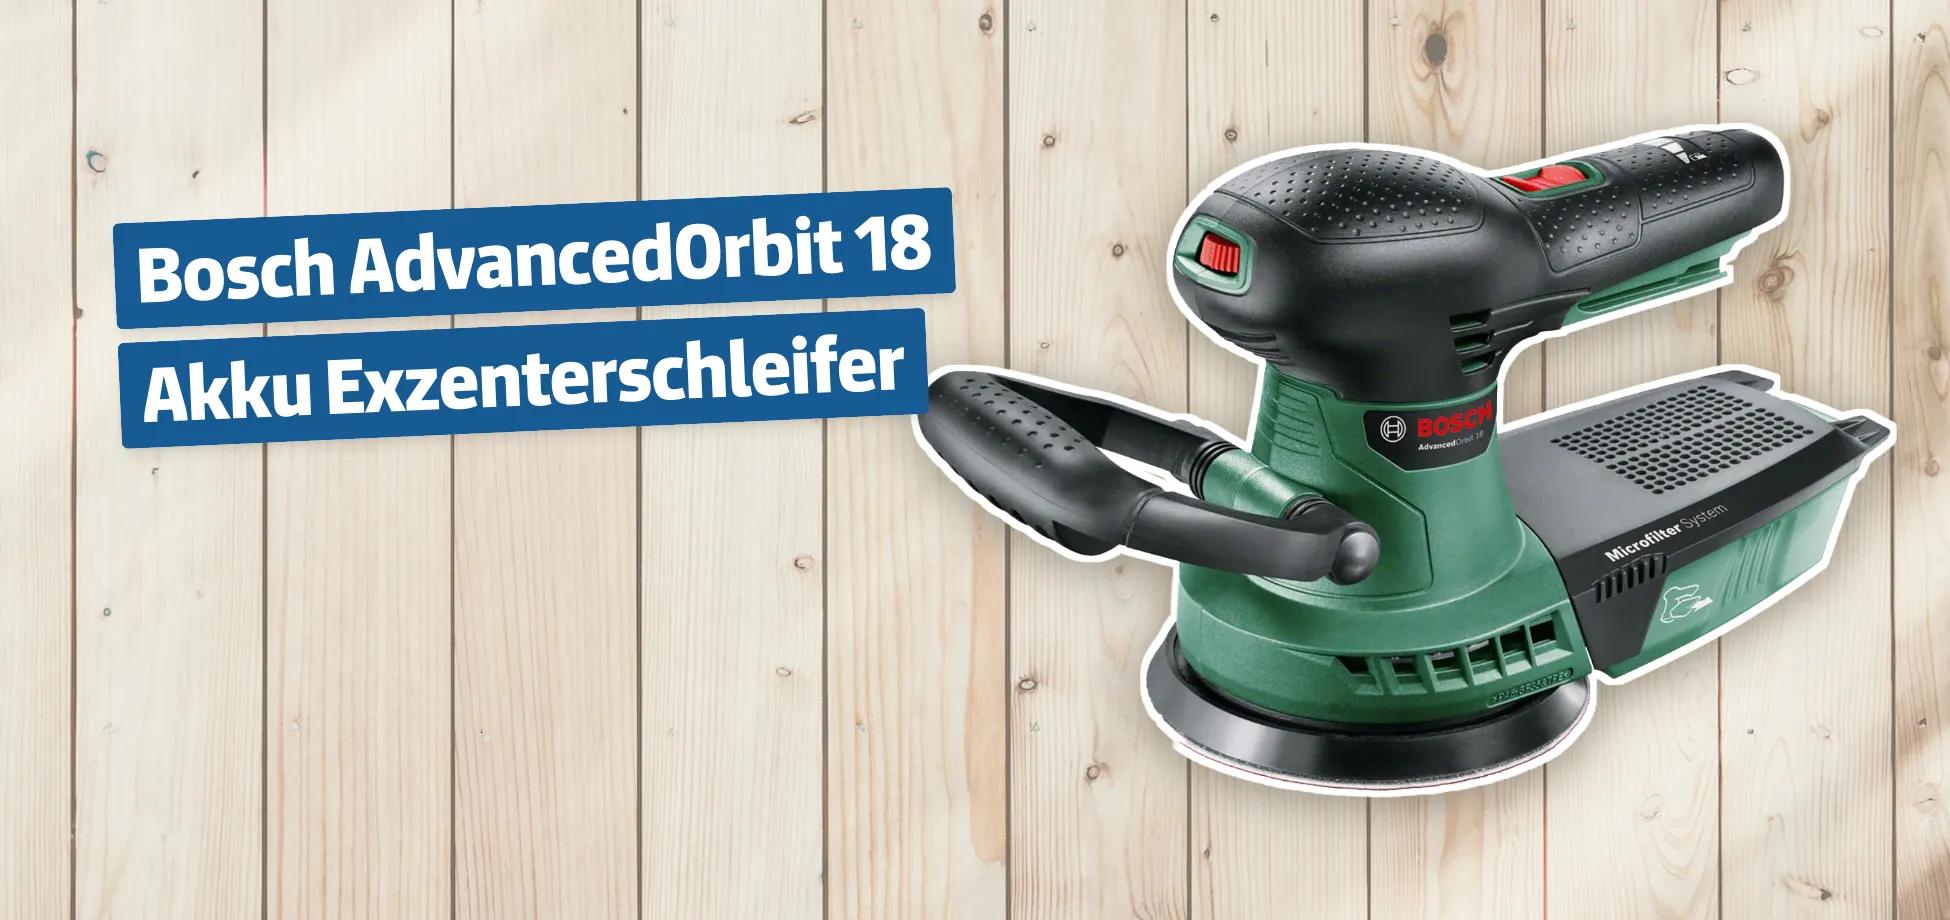 Bosch AdvancedOrbit 18 Akku Exzenterschleifer